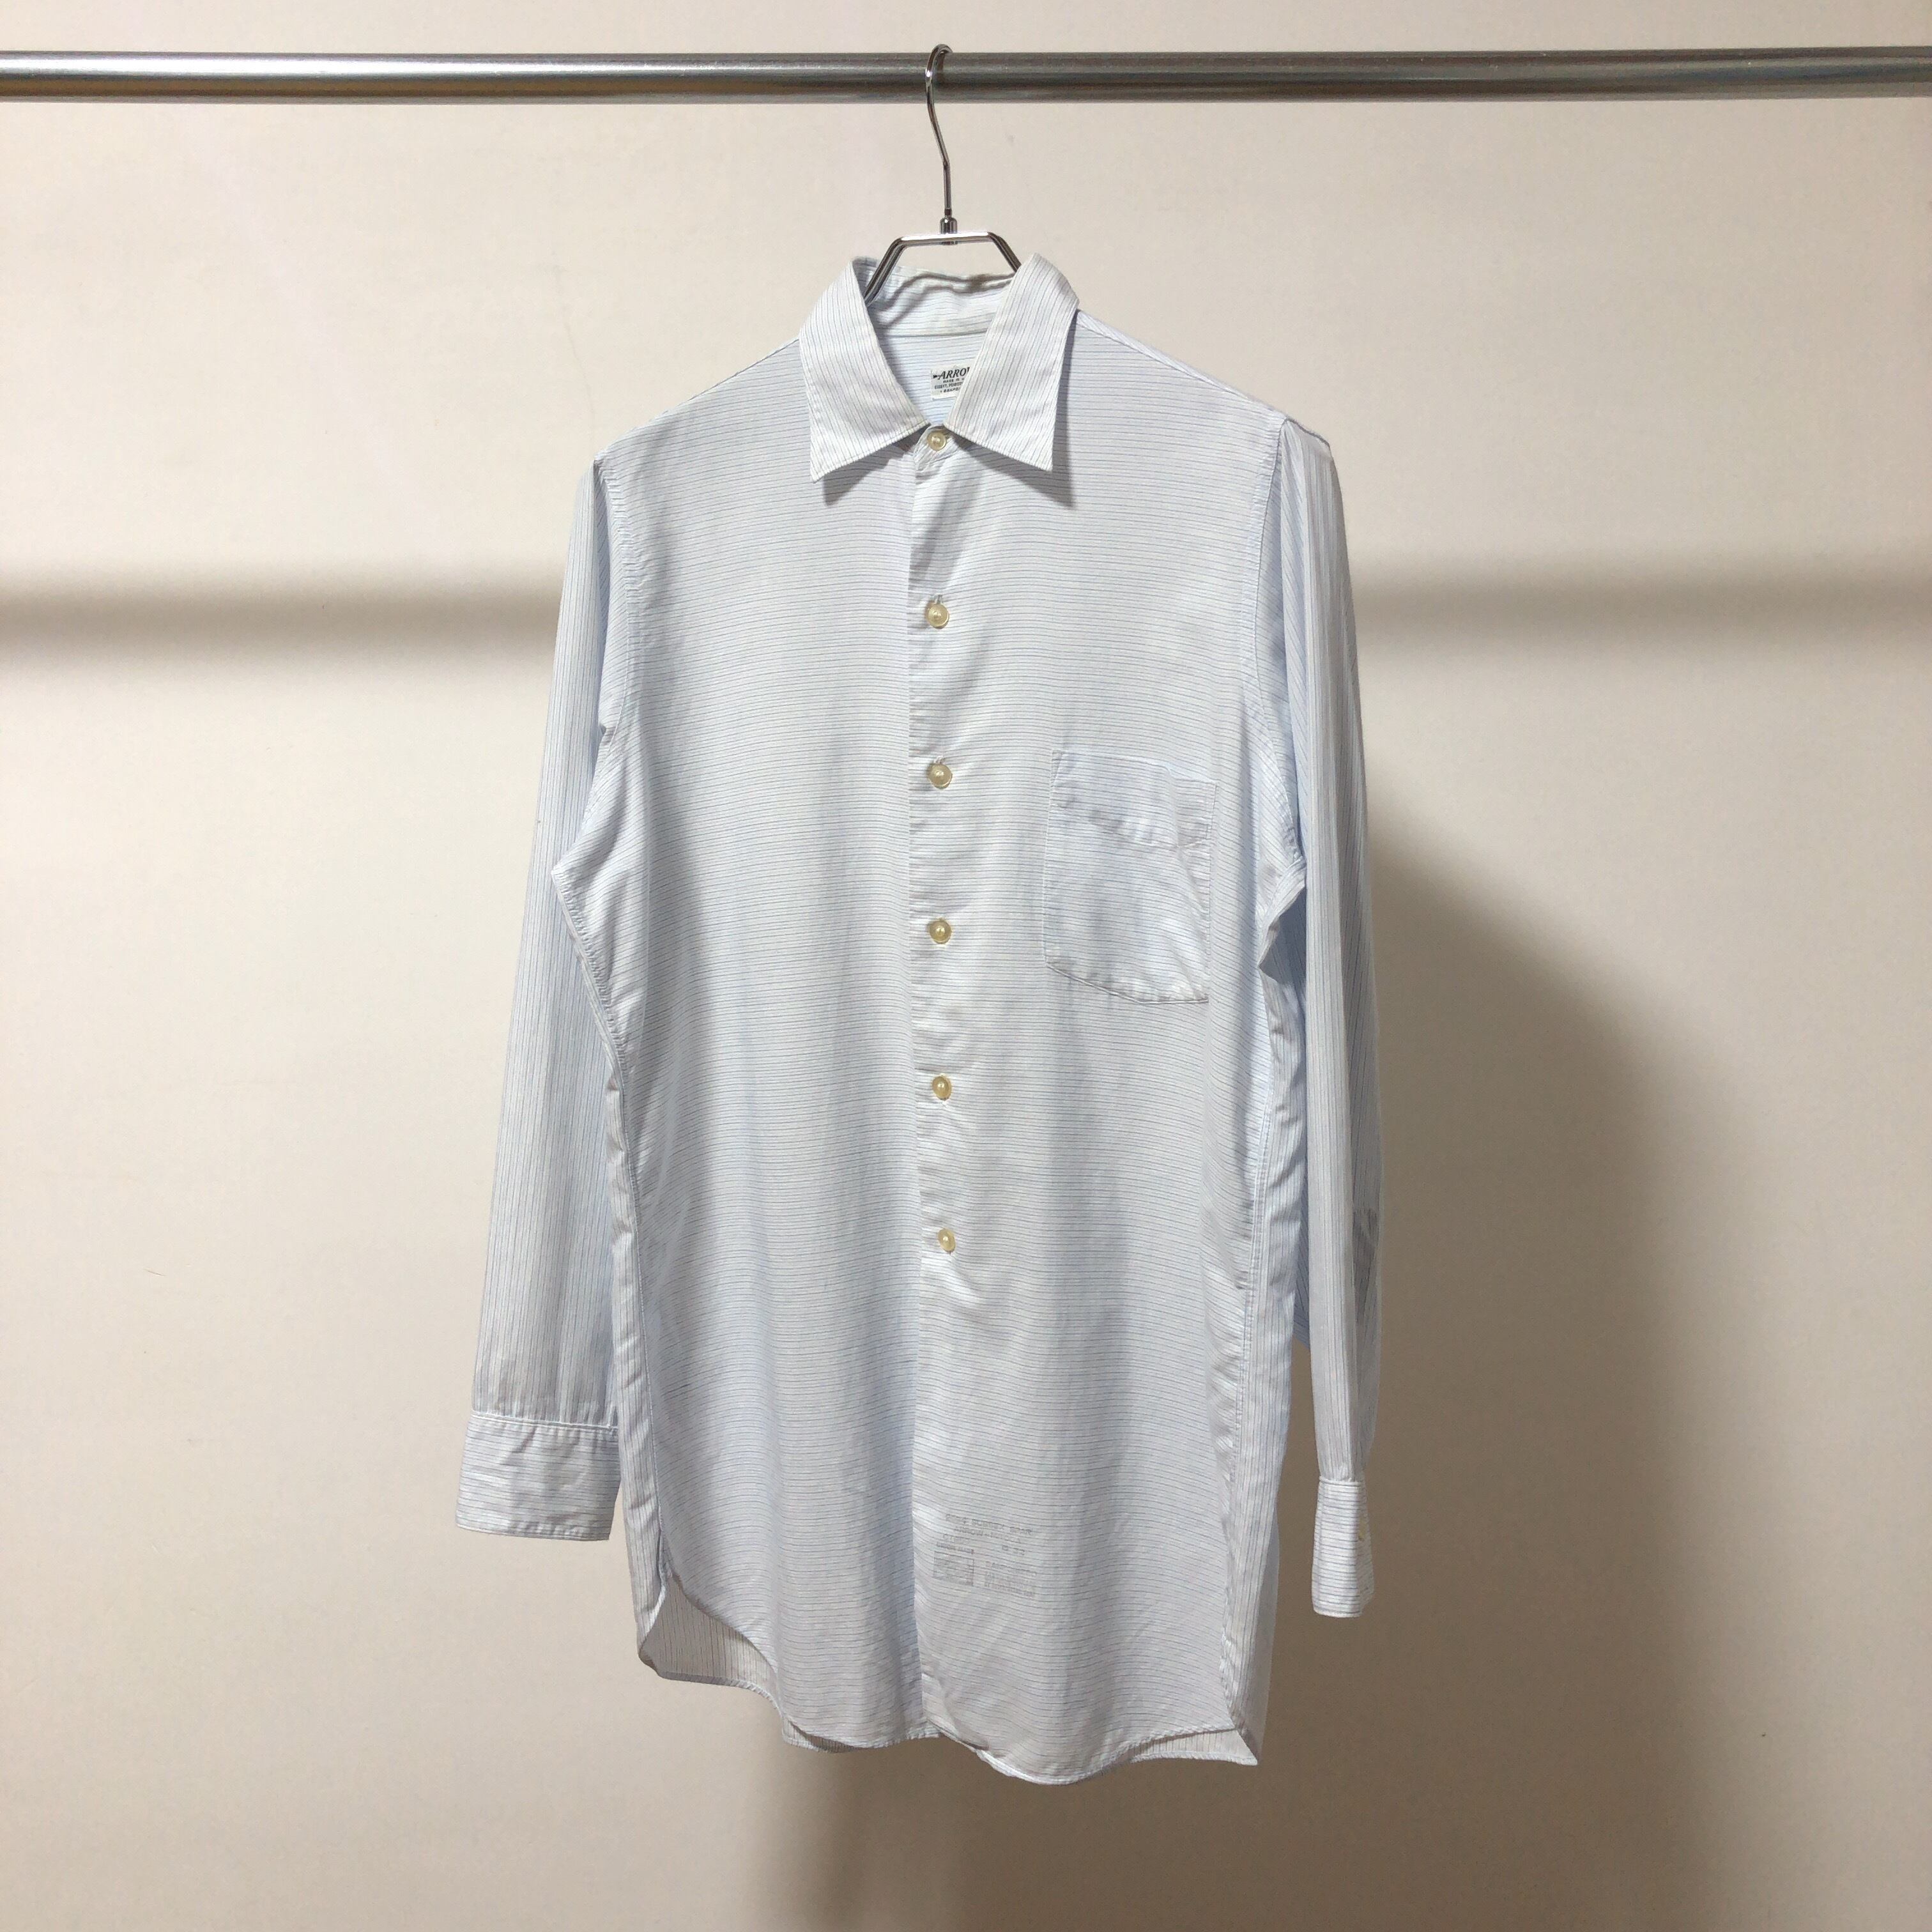 ARROW / 60's Semiwide Collar Dress Shirt / Made in USA  /アロー/ドレスシャツ/ヴィンテージ/60年代/アメリカ製